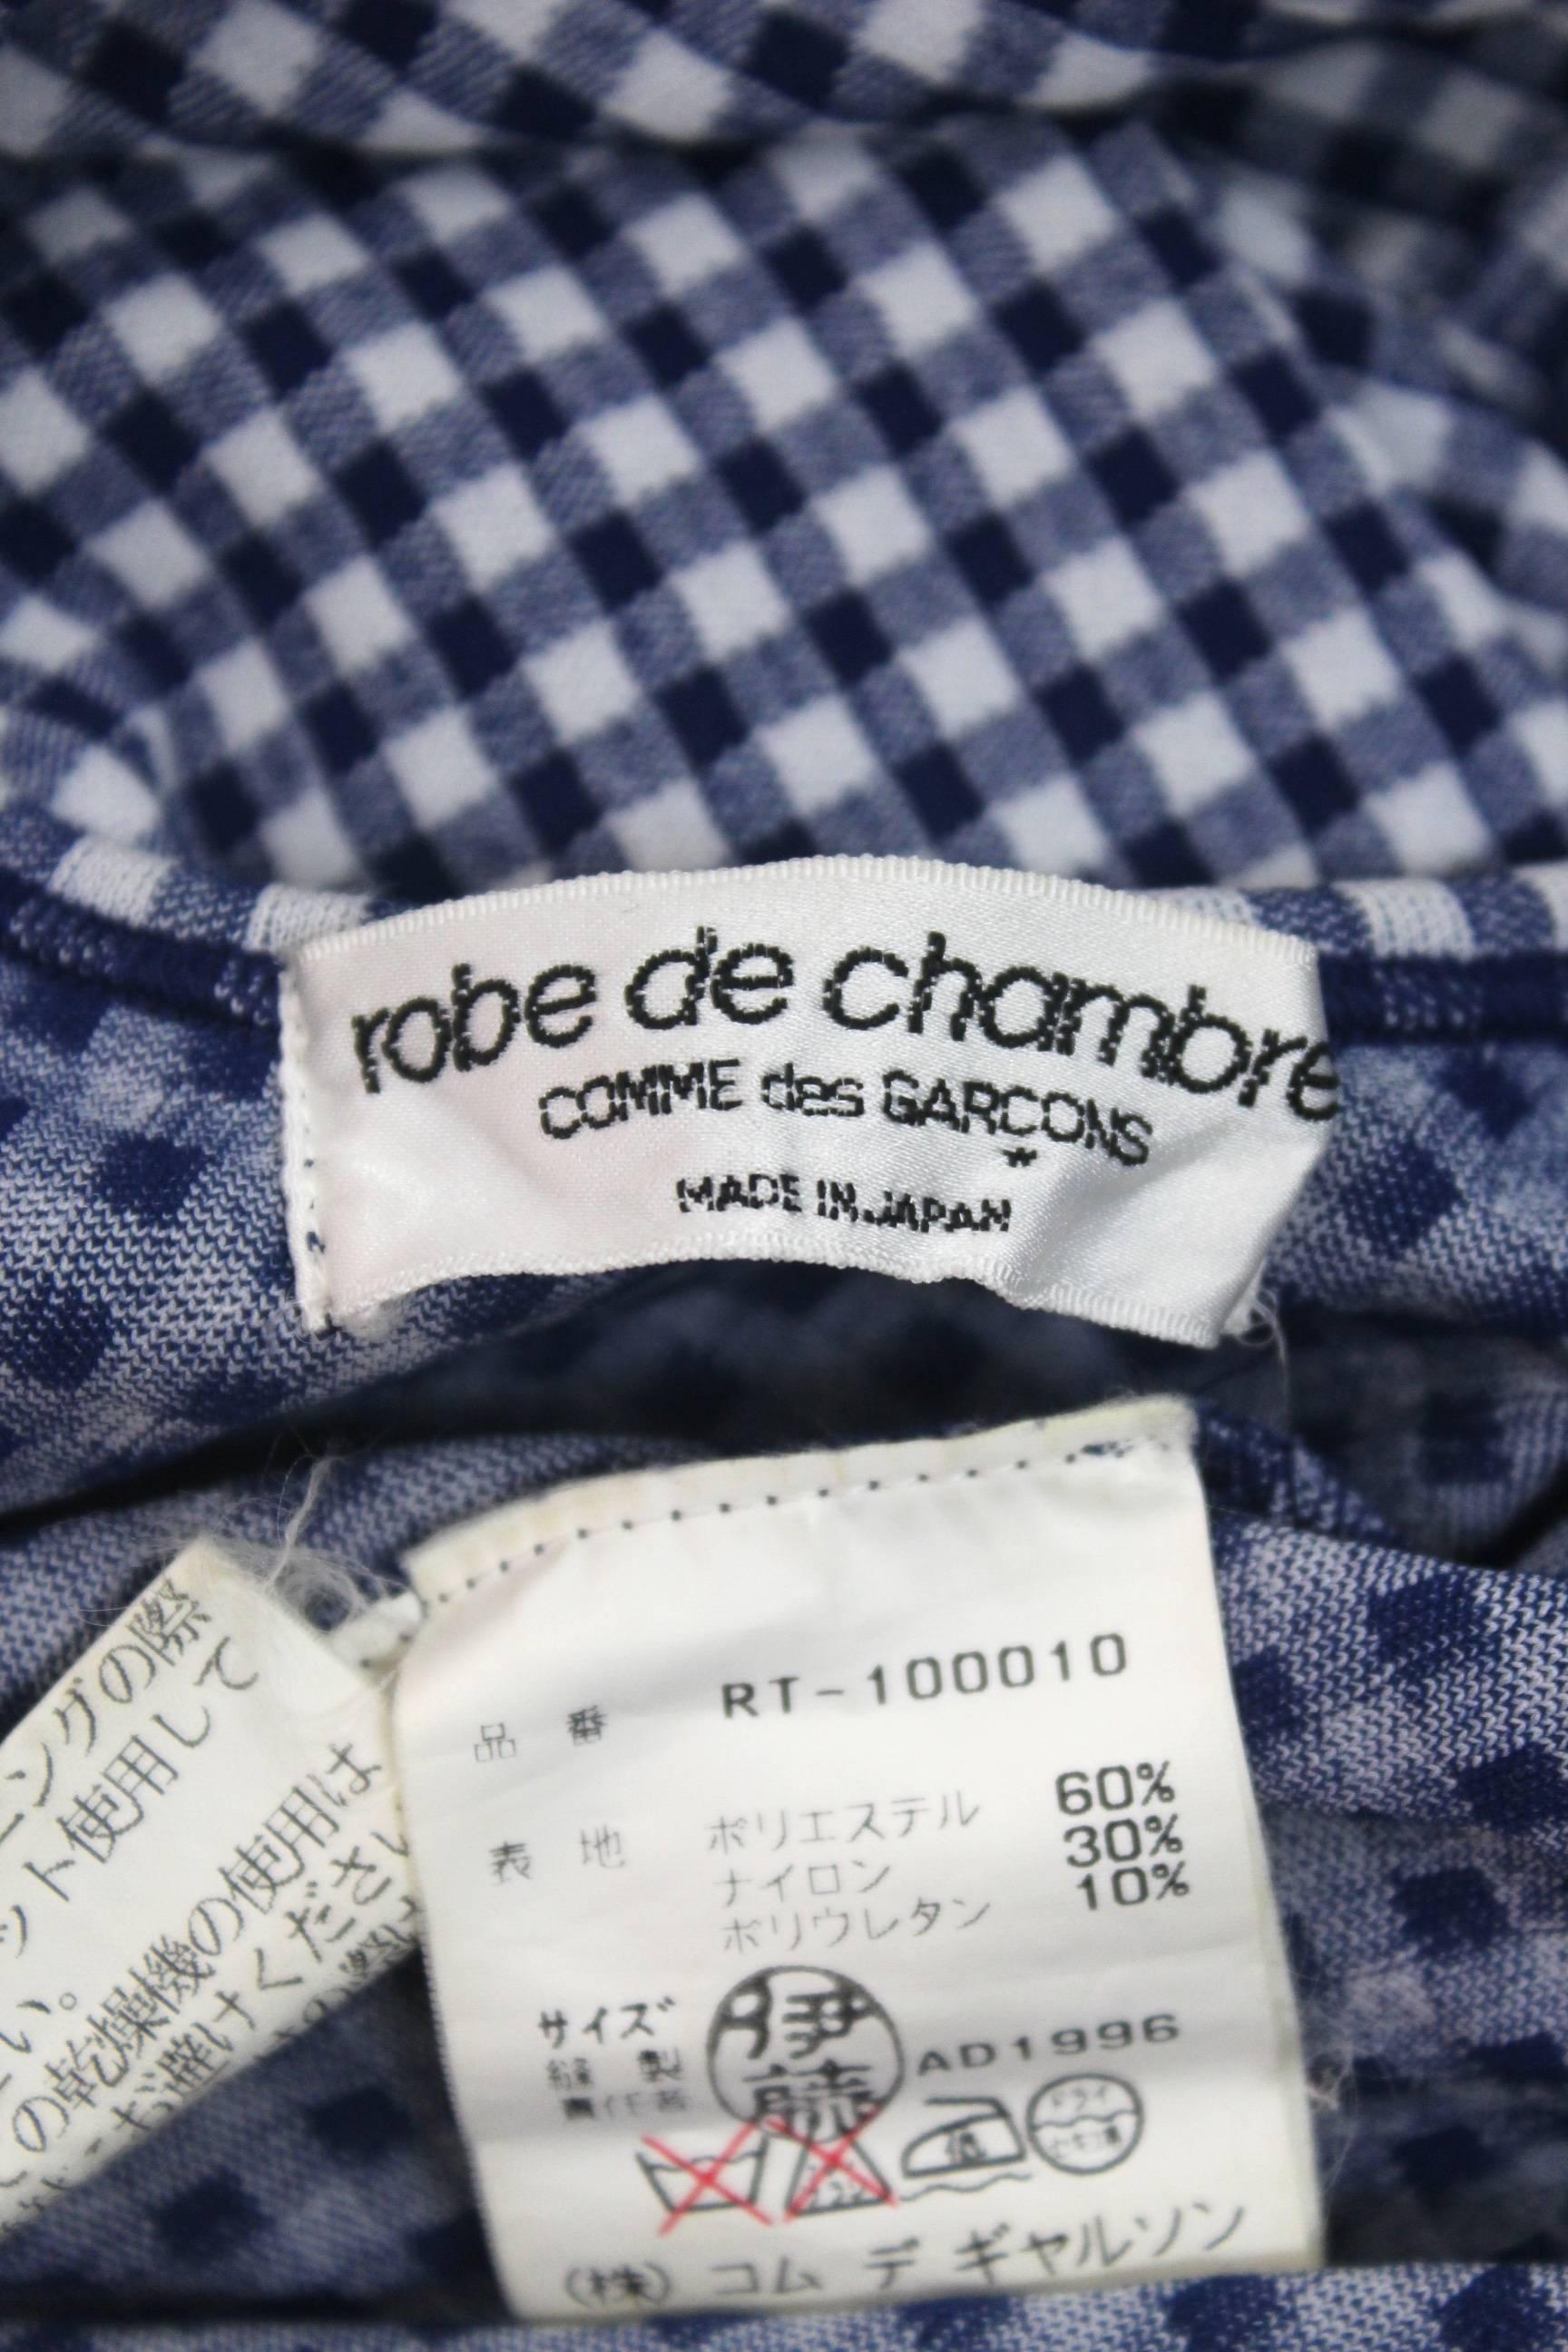 CDG Robe de Chambre 1996 Collection 'Body Meets Dress' 5